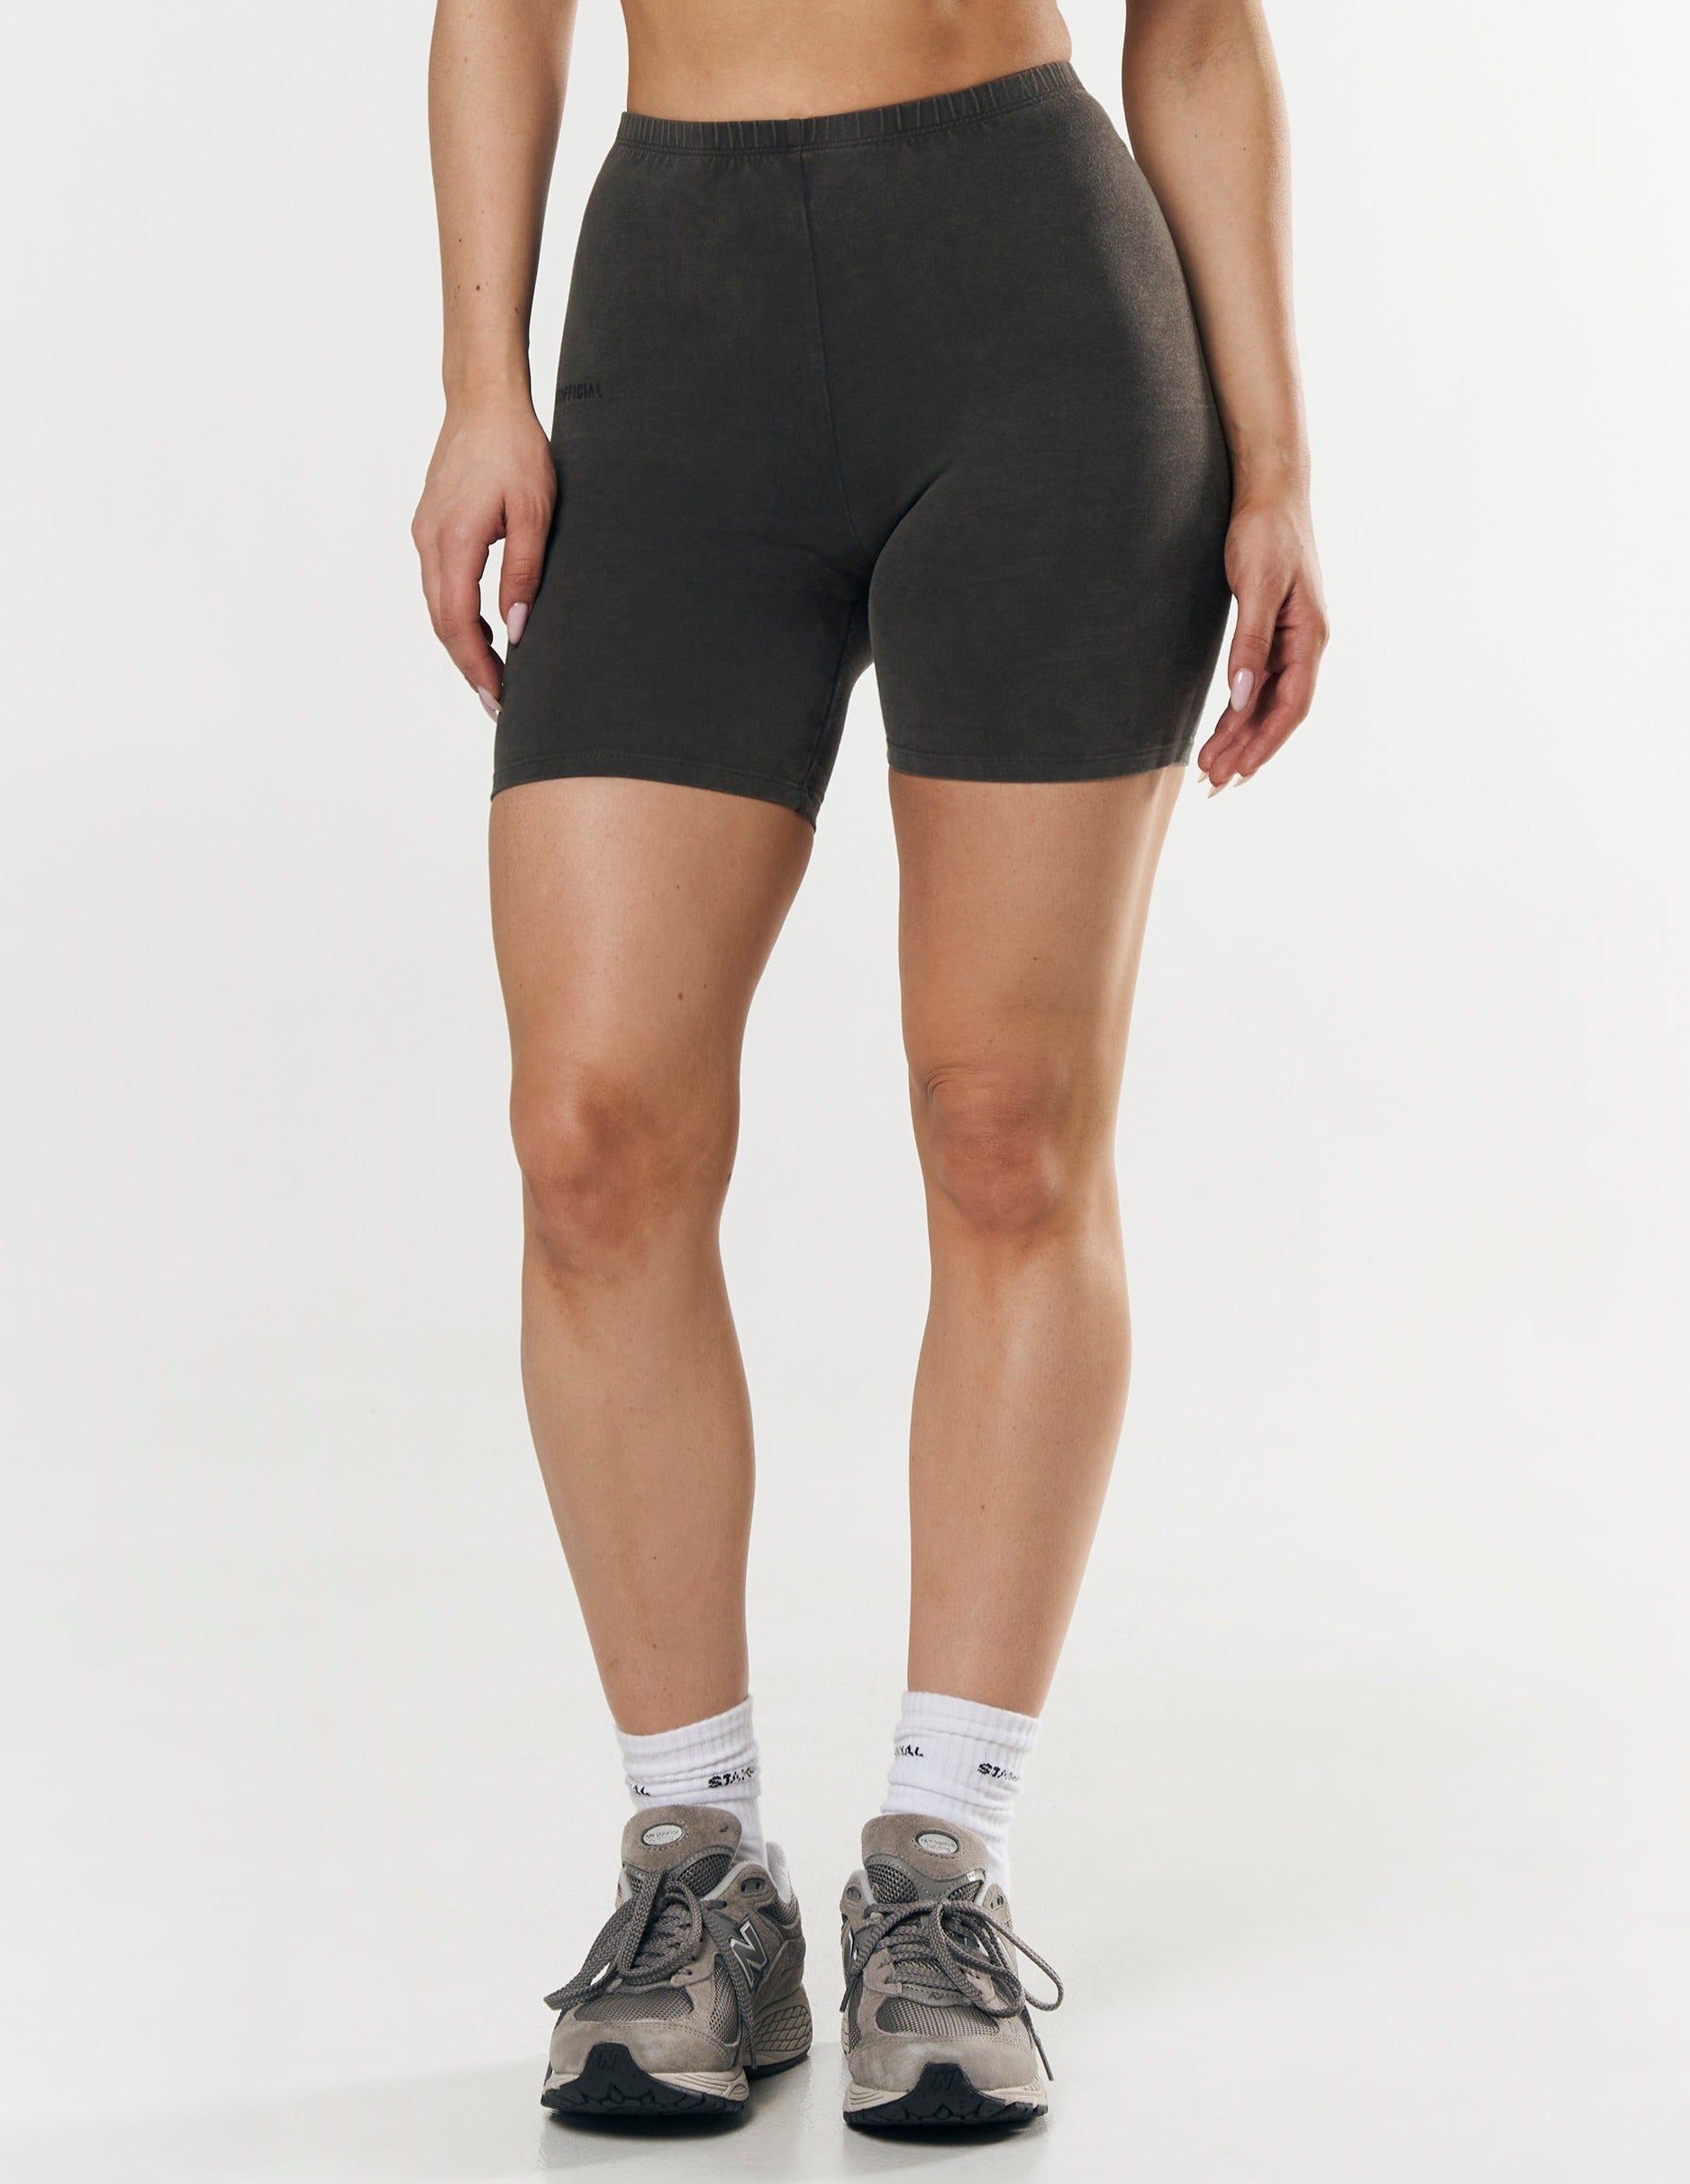 stax-explorer-bike-shorts-ash